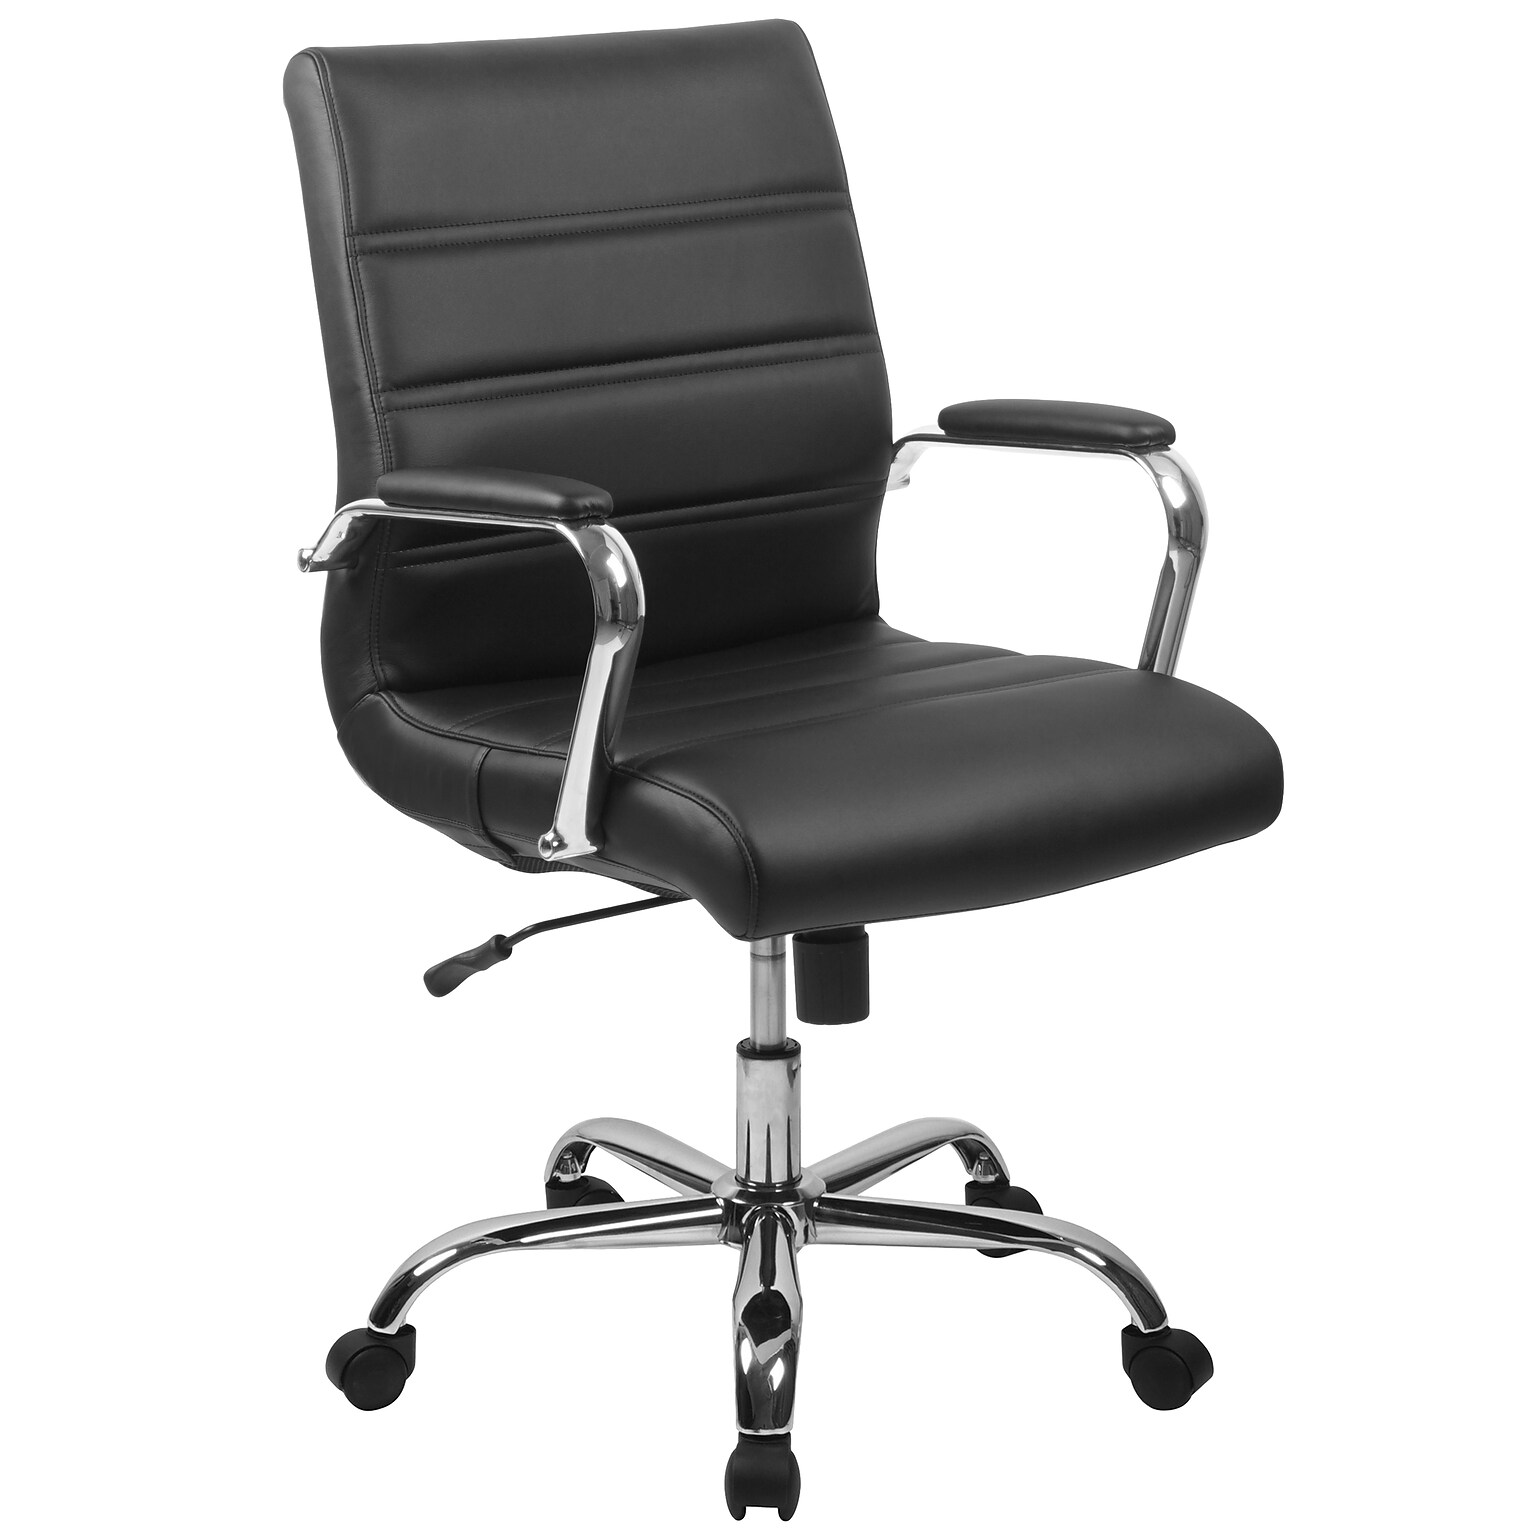 Flash Furniture Whitney Ergonomic LeatherSoft Swivel Mid-Back Executive Office Chair, Black/Chrome (GO2286MBK)